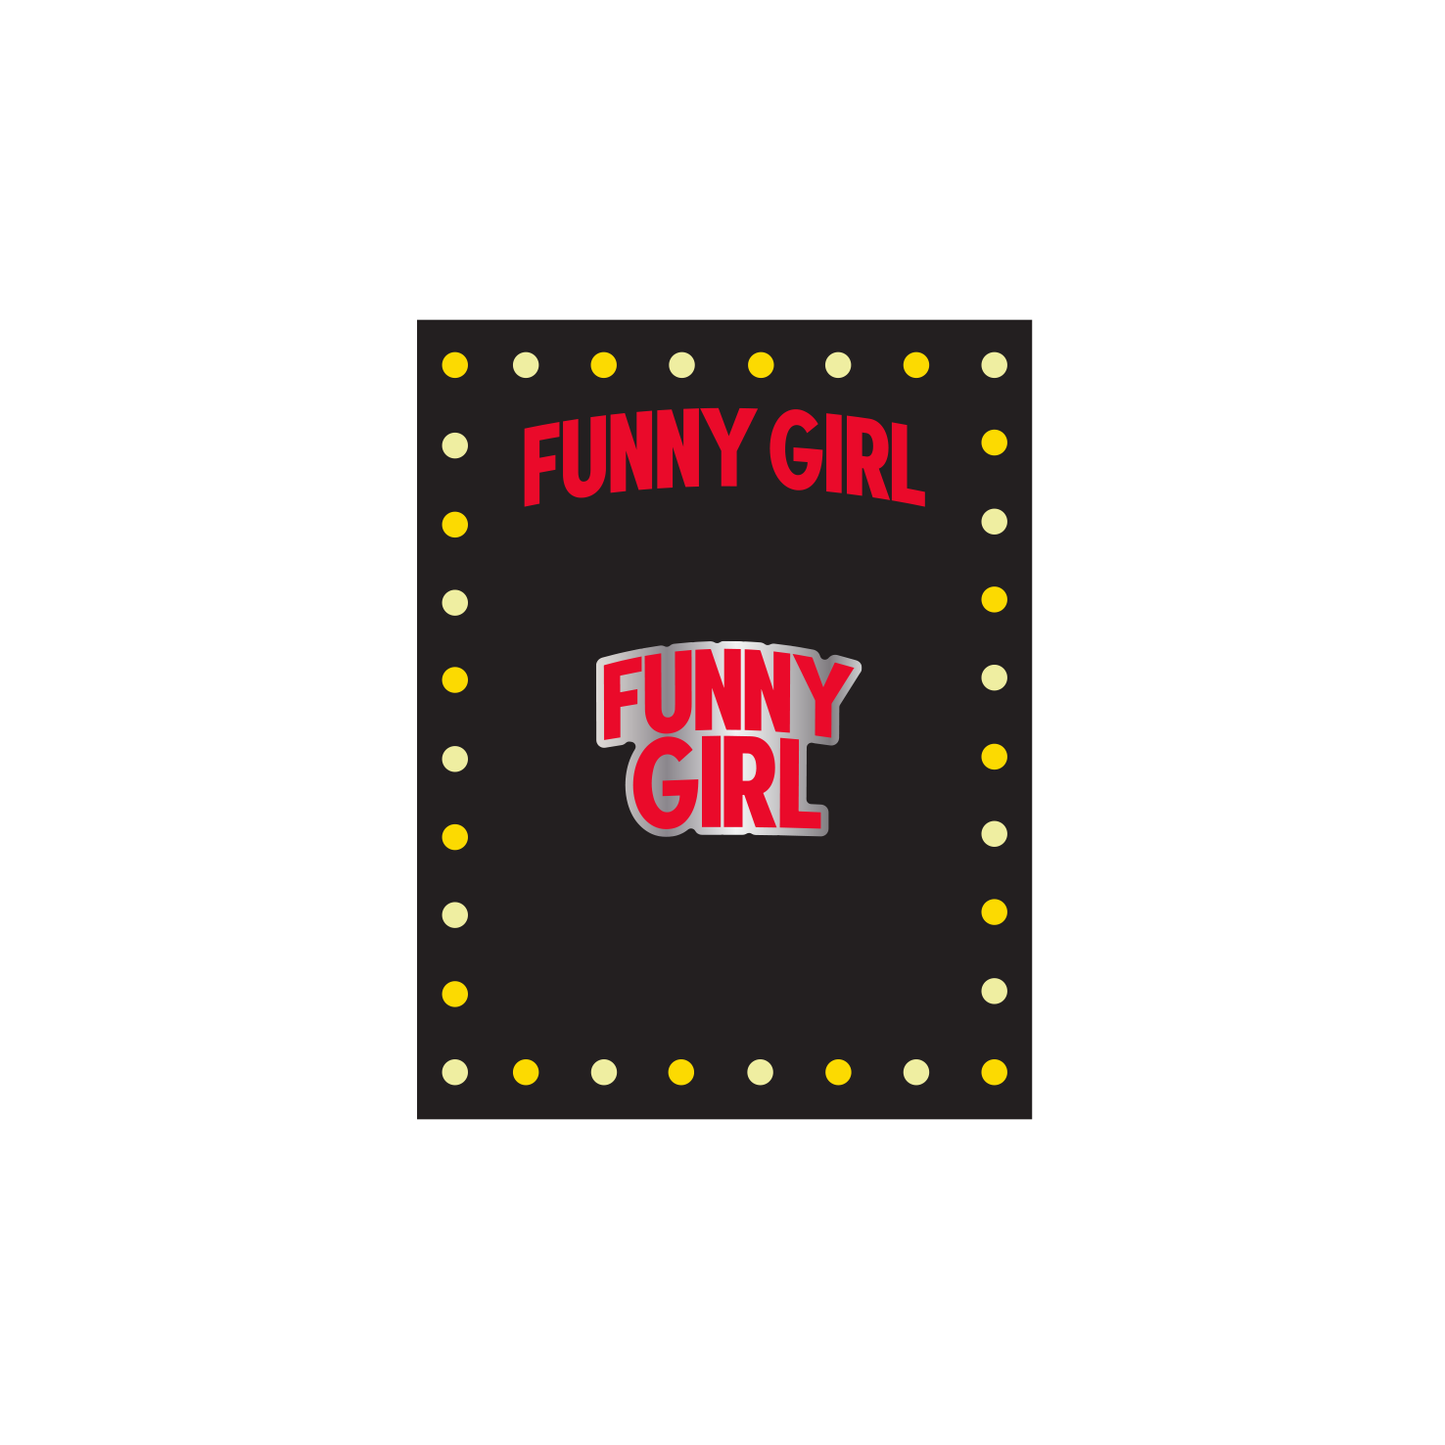 FUNNY GIRL Title Lapel Pin